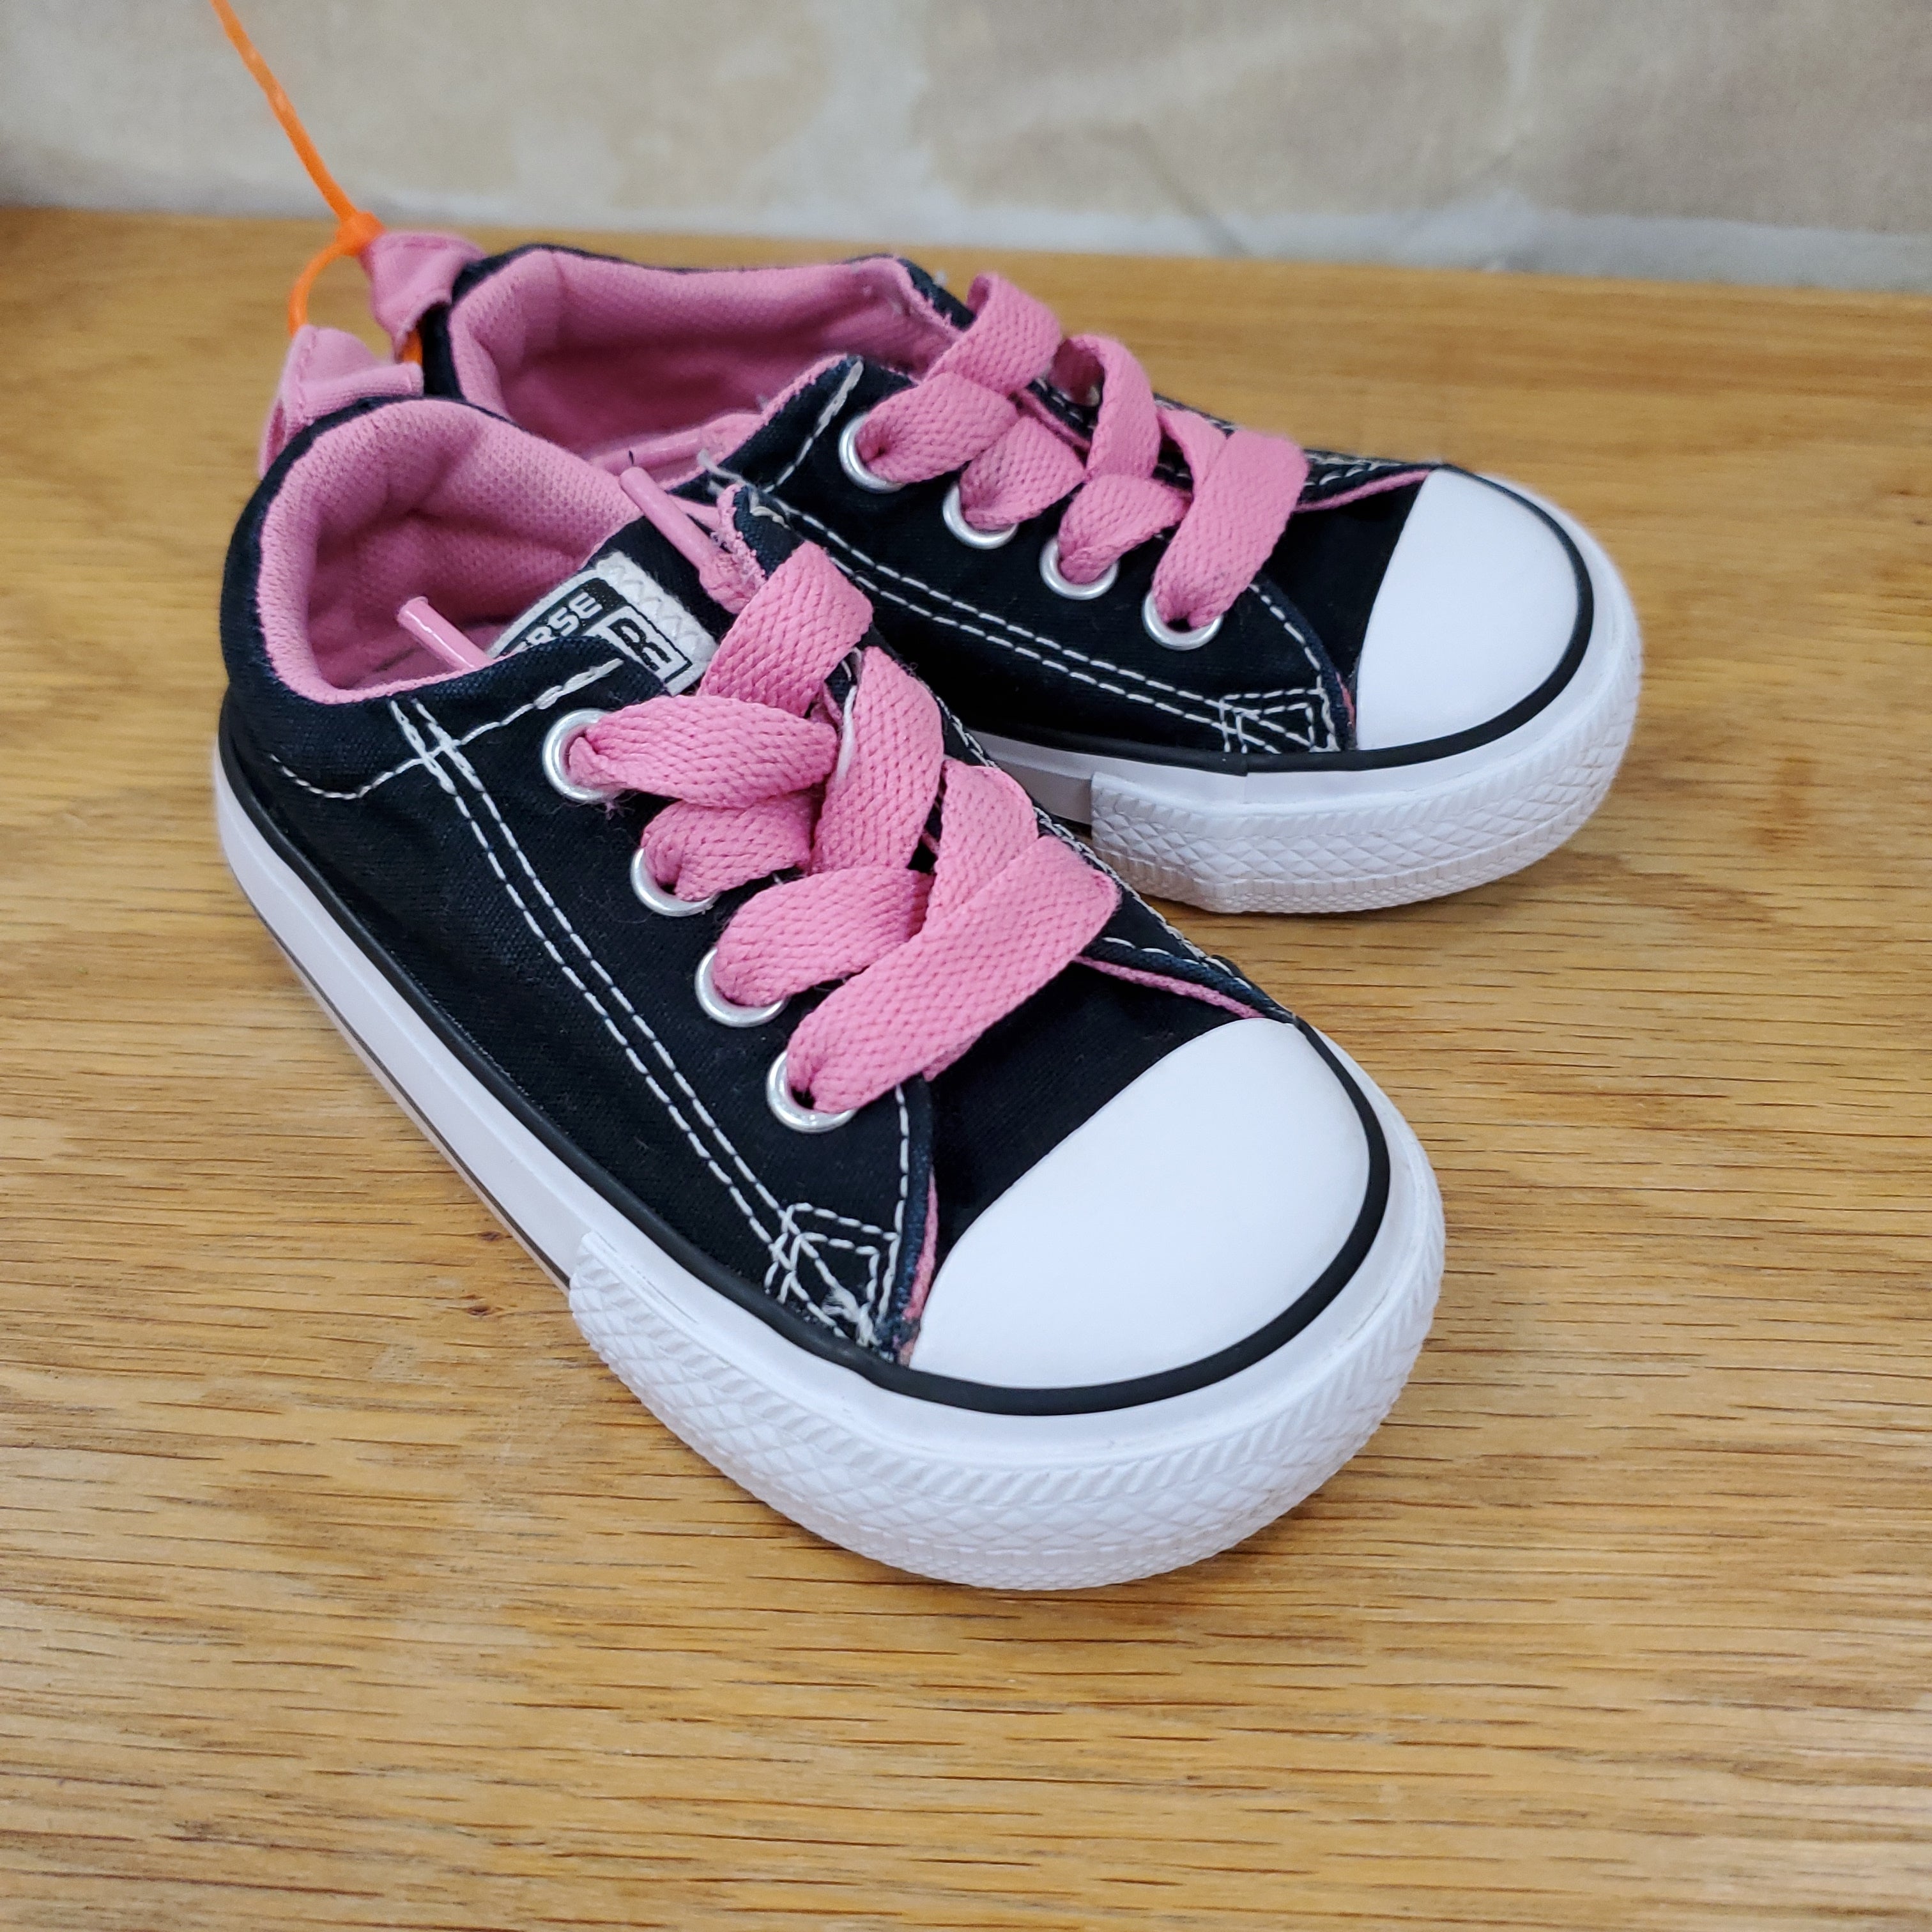 Converse girls tennis shoes black/pink tie 5